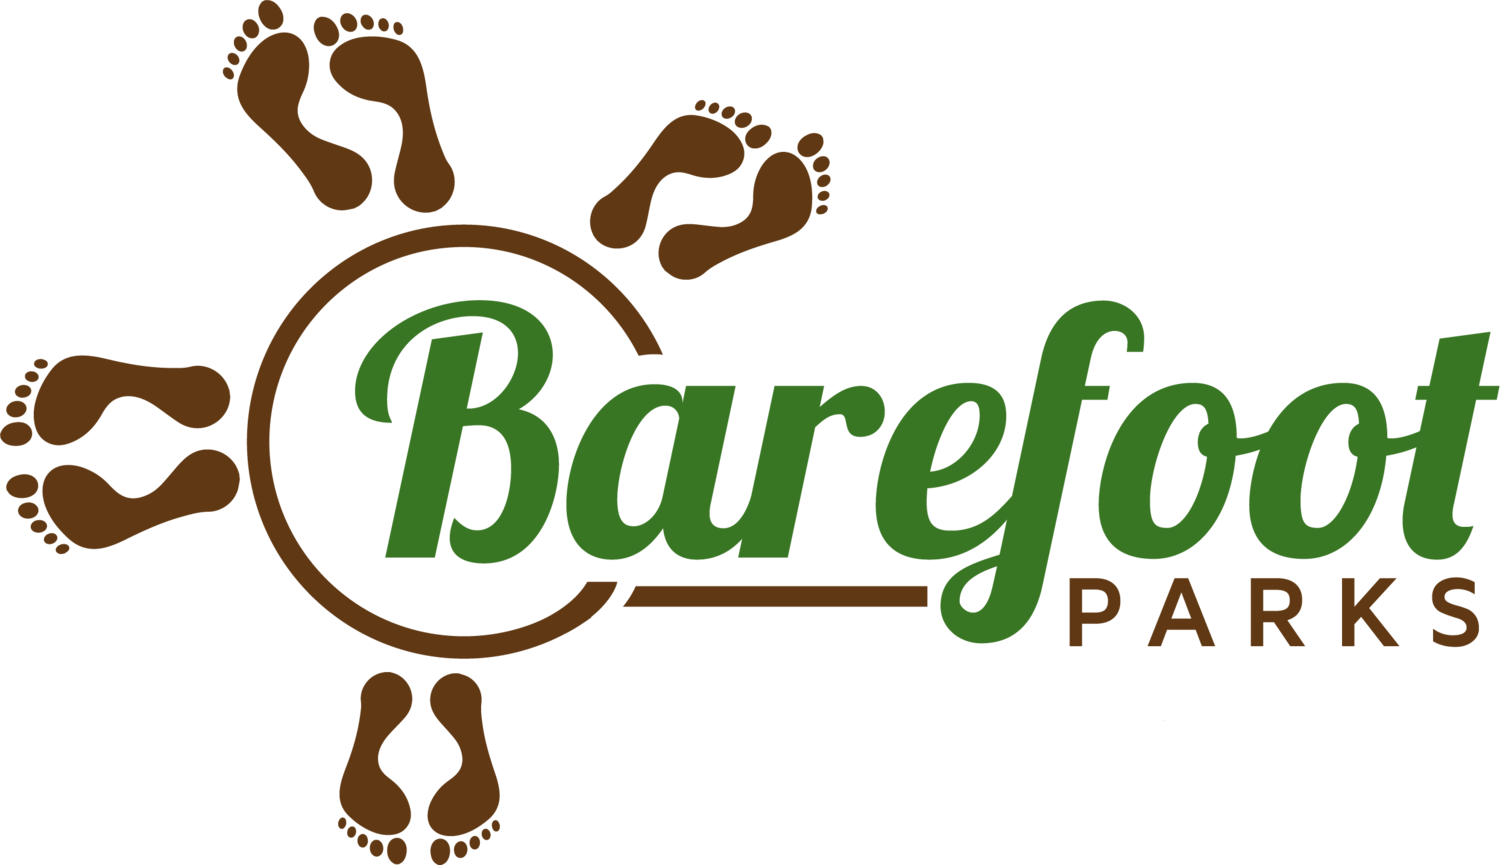 Barefoot Park